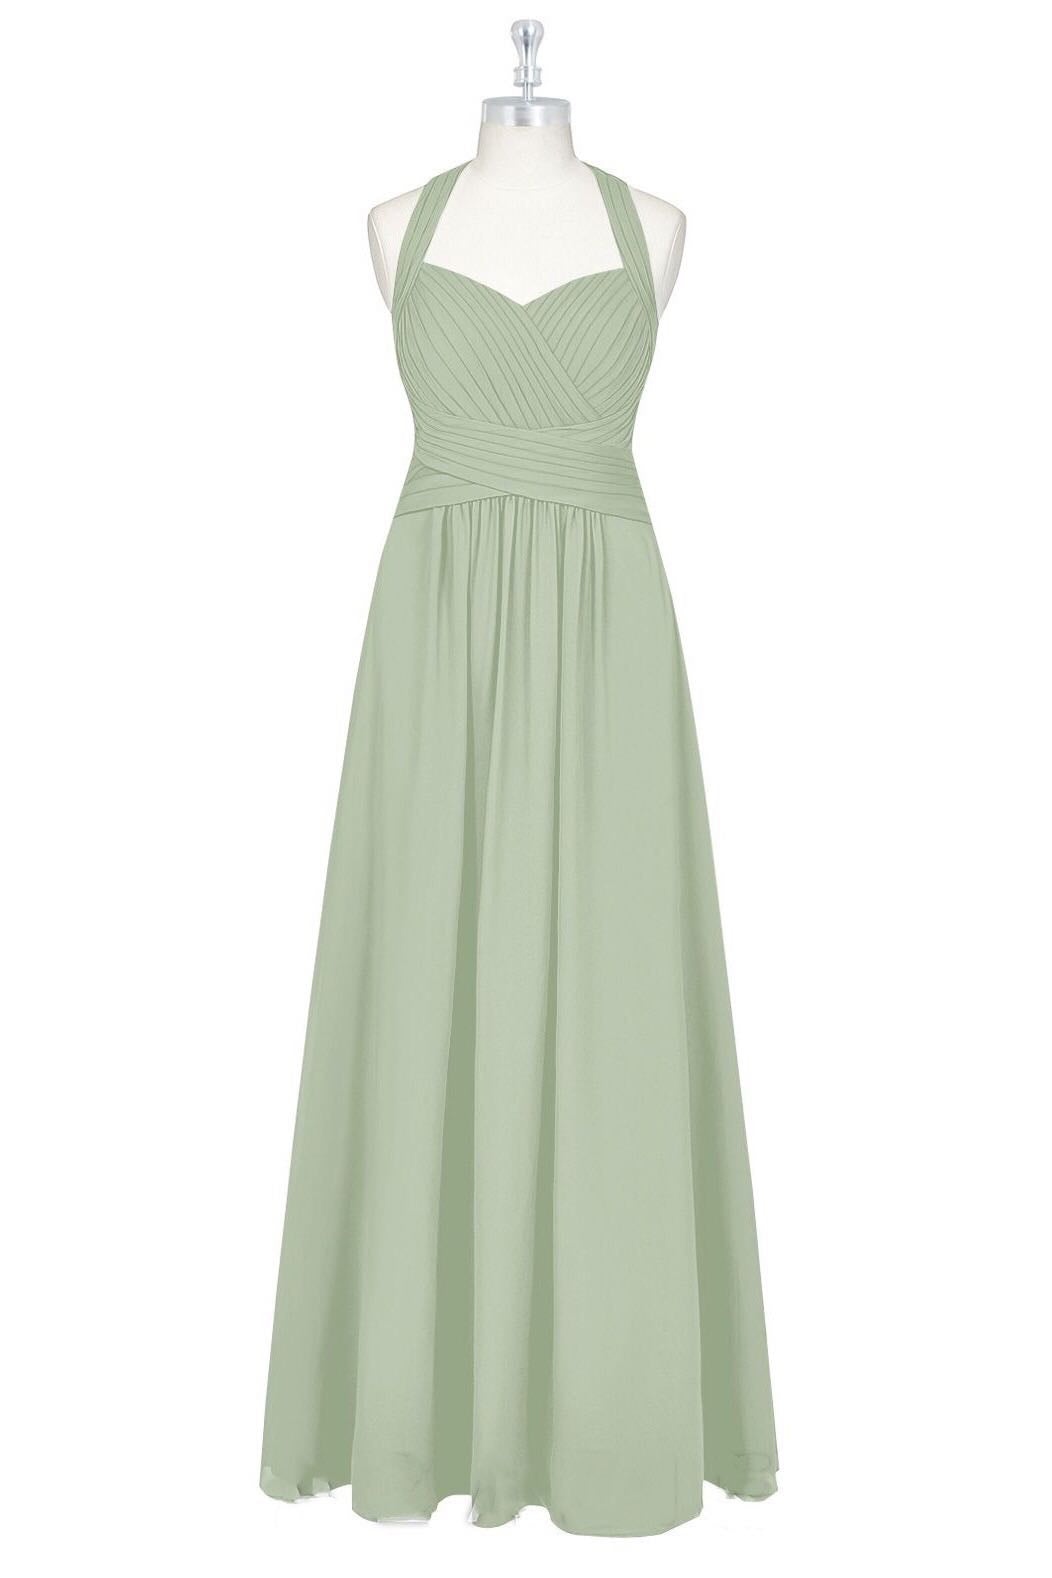 Sage Green Halter Backless A-Line Bridesmaid Dress